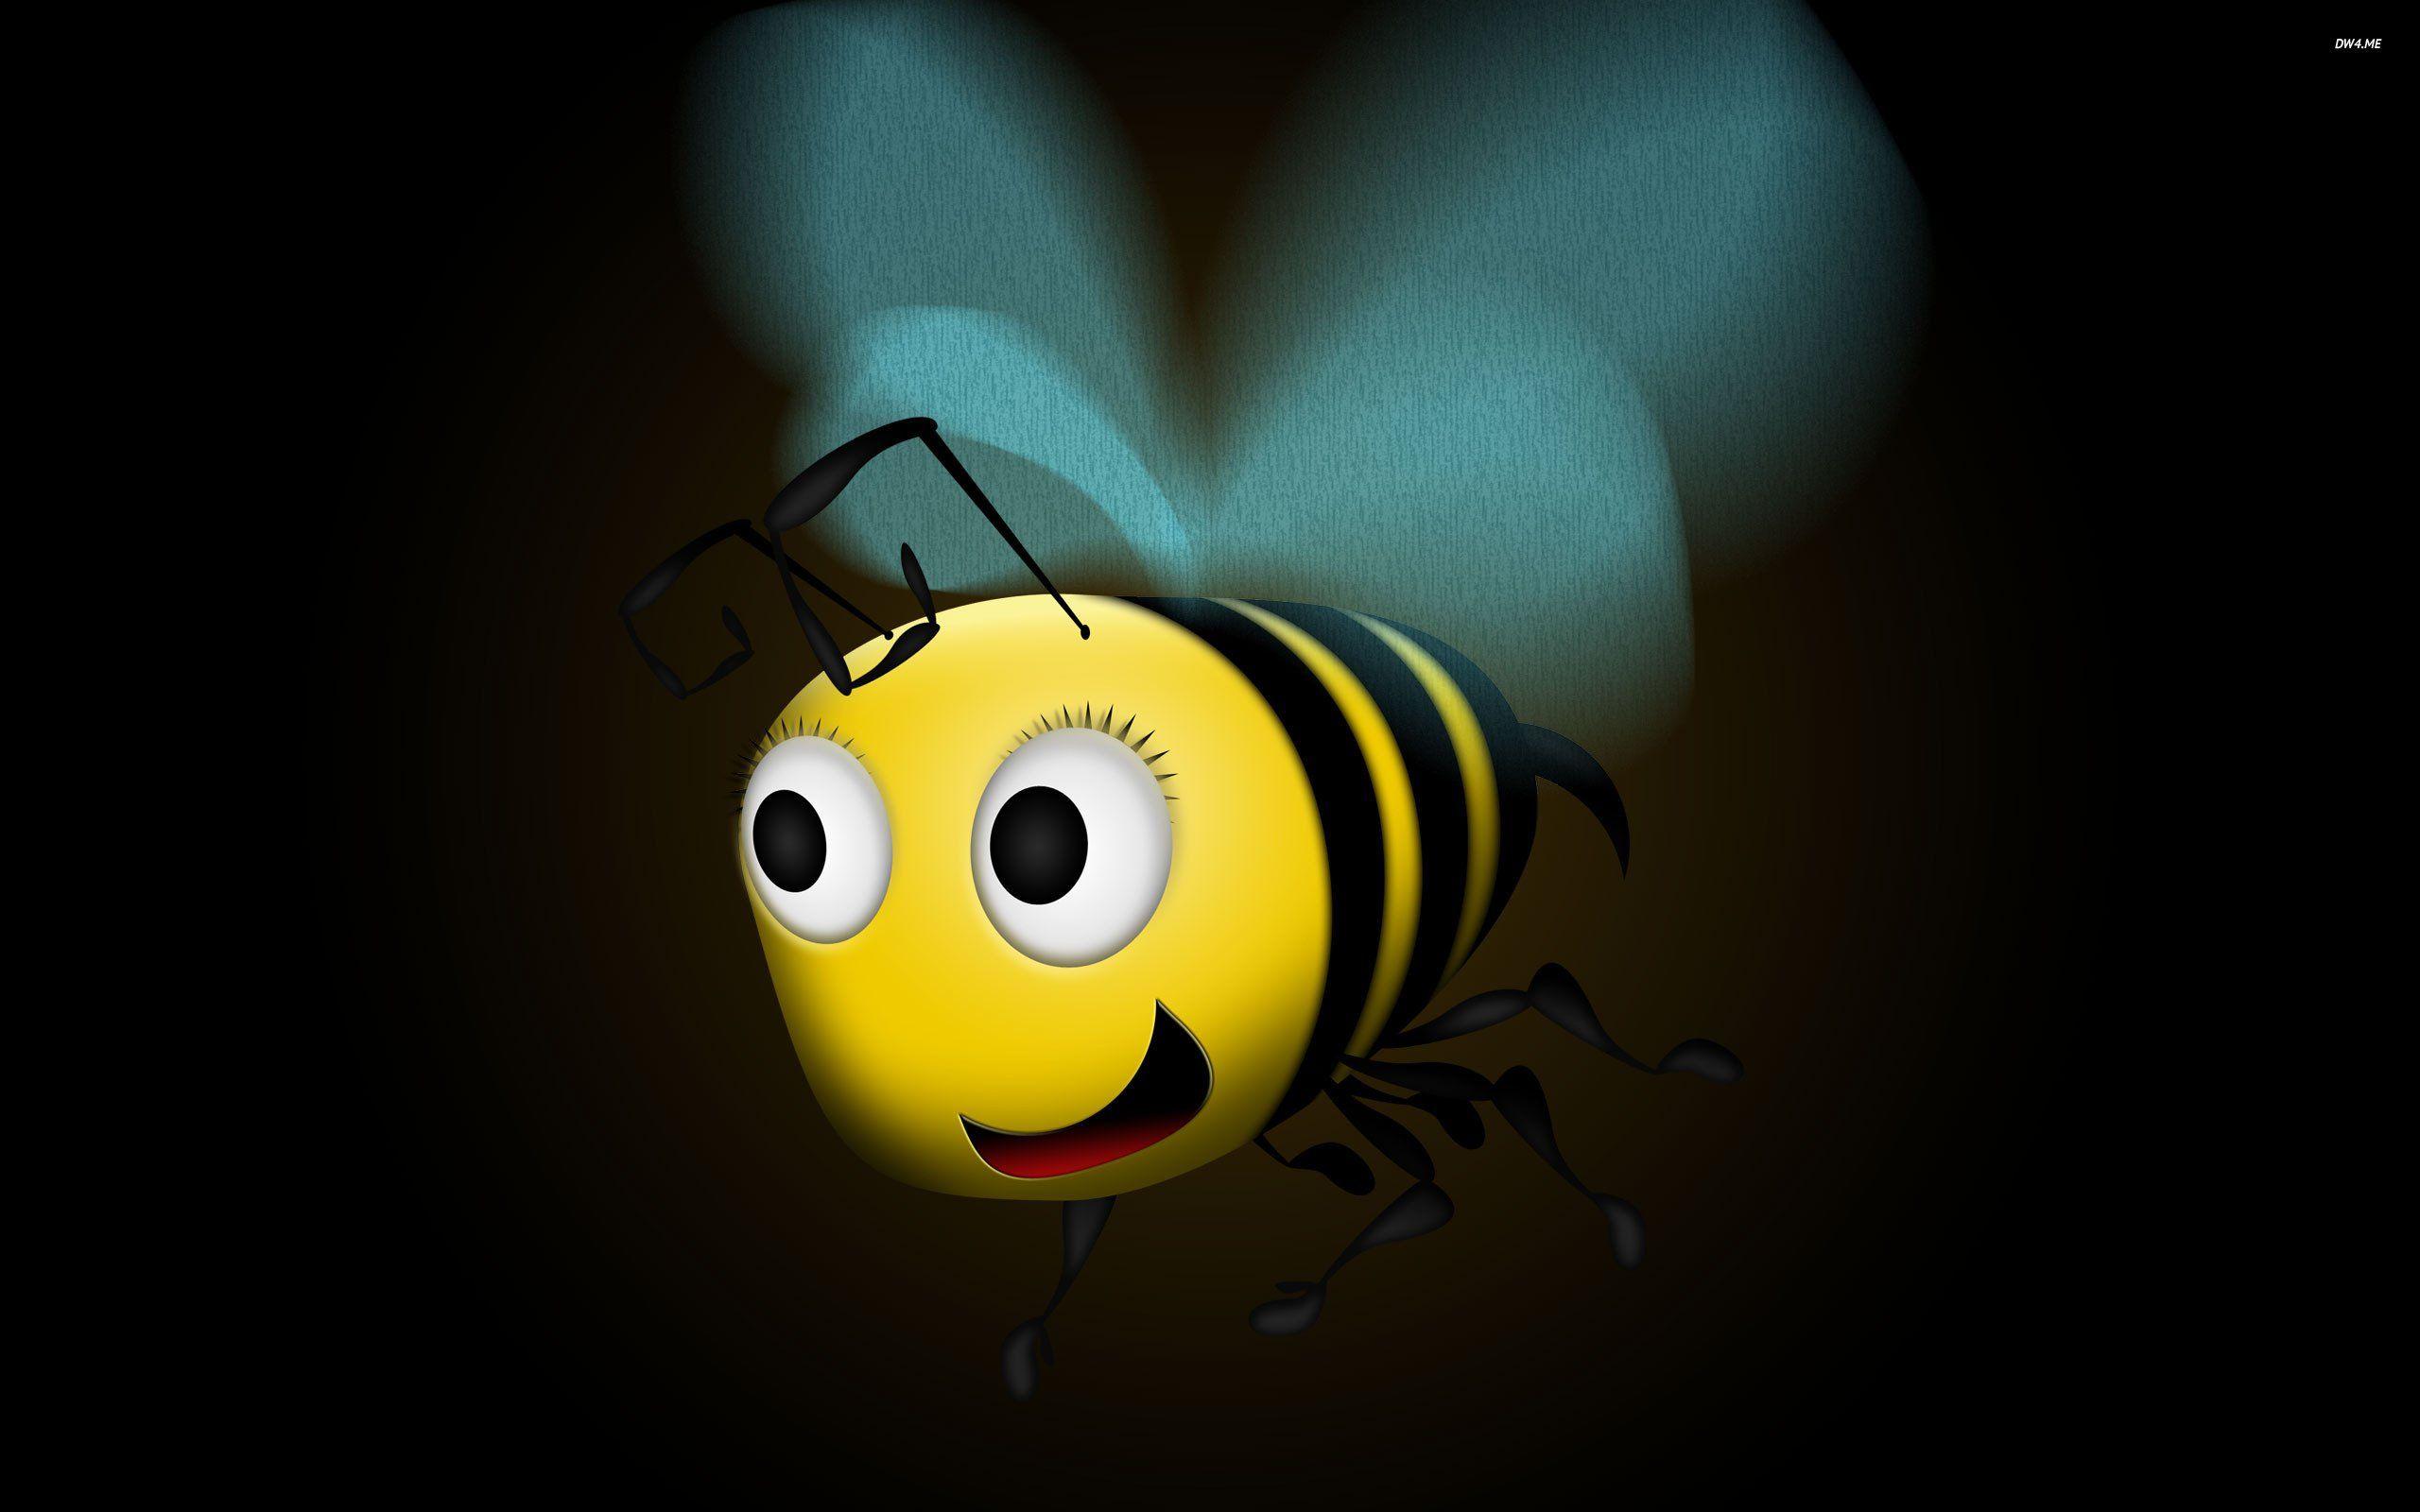 Flying Honey Bee